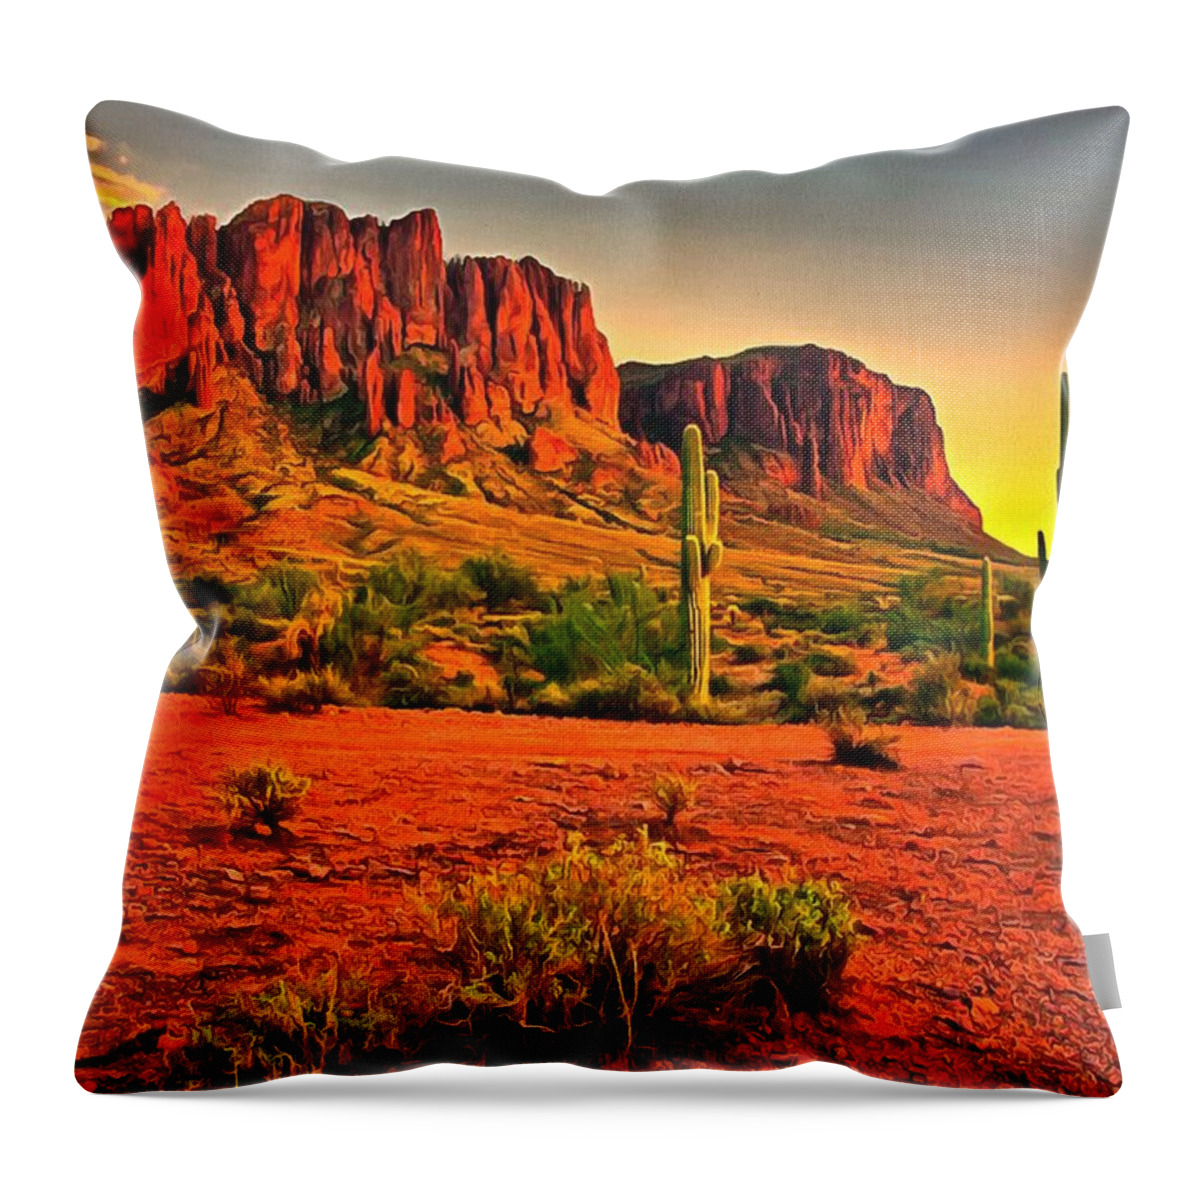 Landscape Throw Pillow featuring the digital art Sonoran Desert by Charmaine Zoe